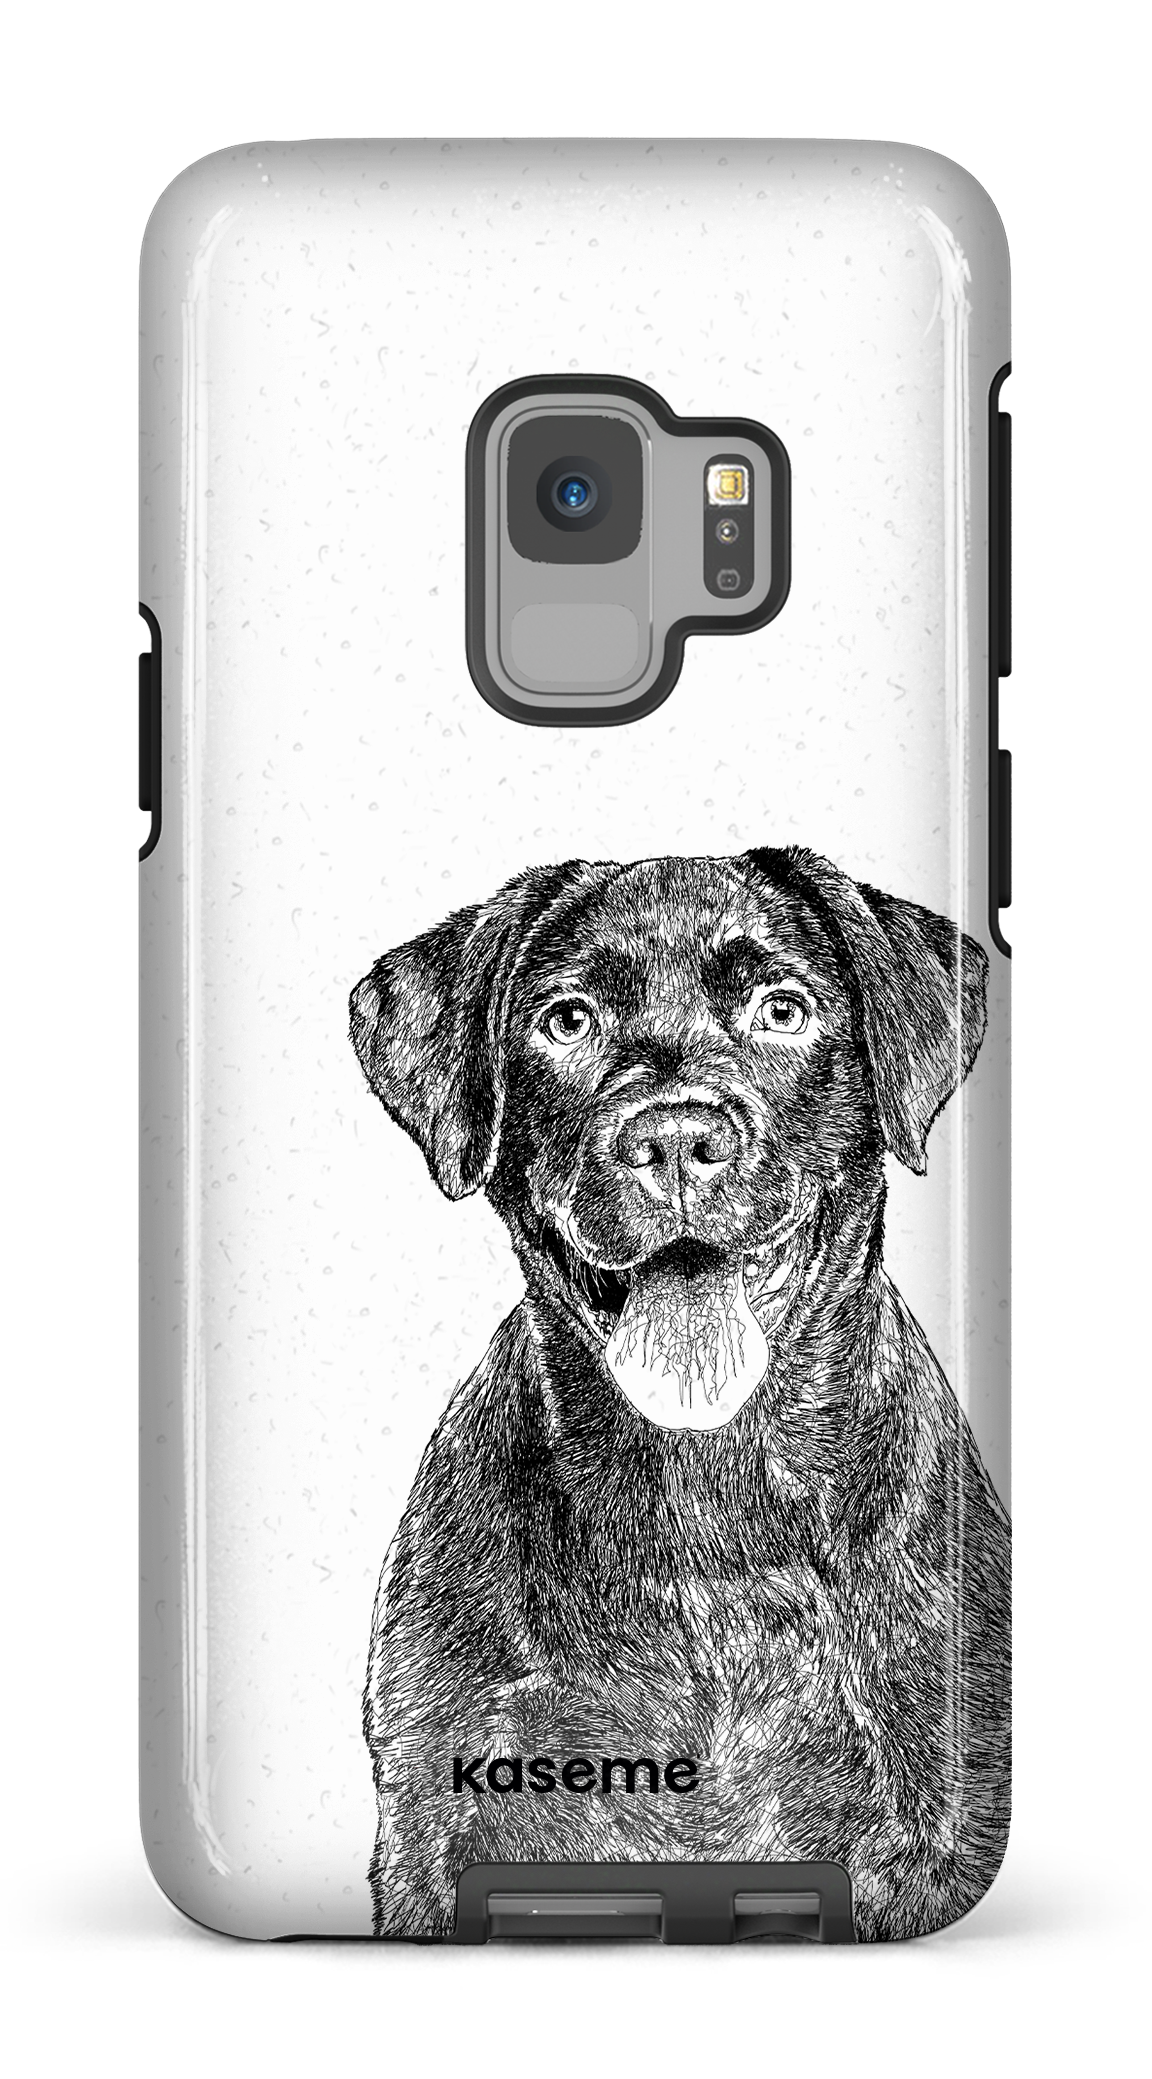 Labrador Retriever - Galaxy S9